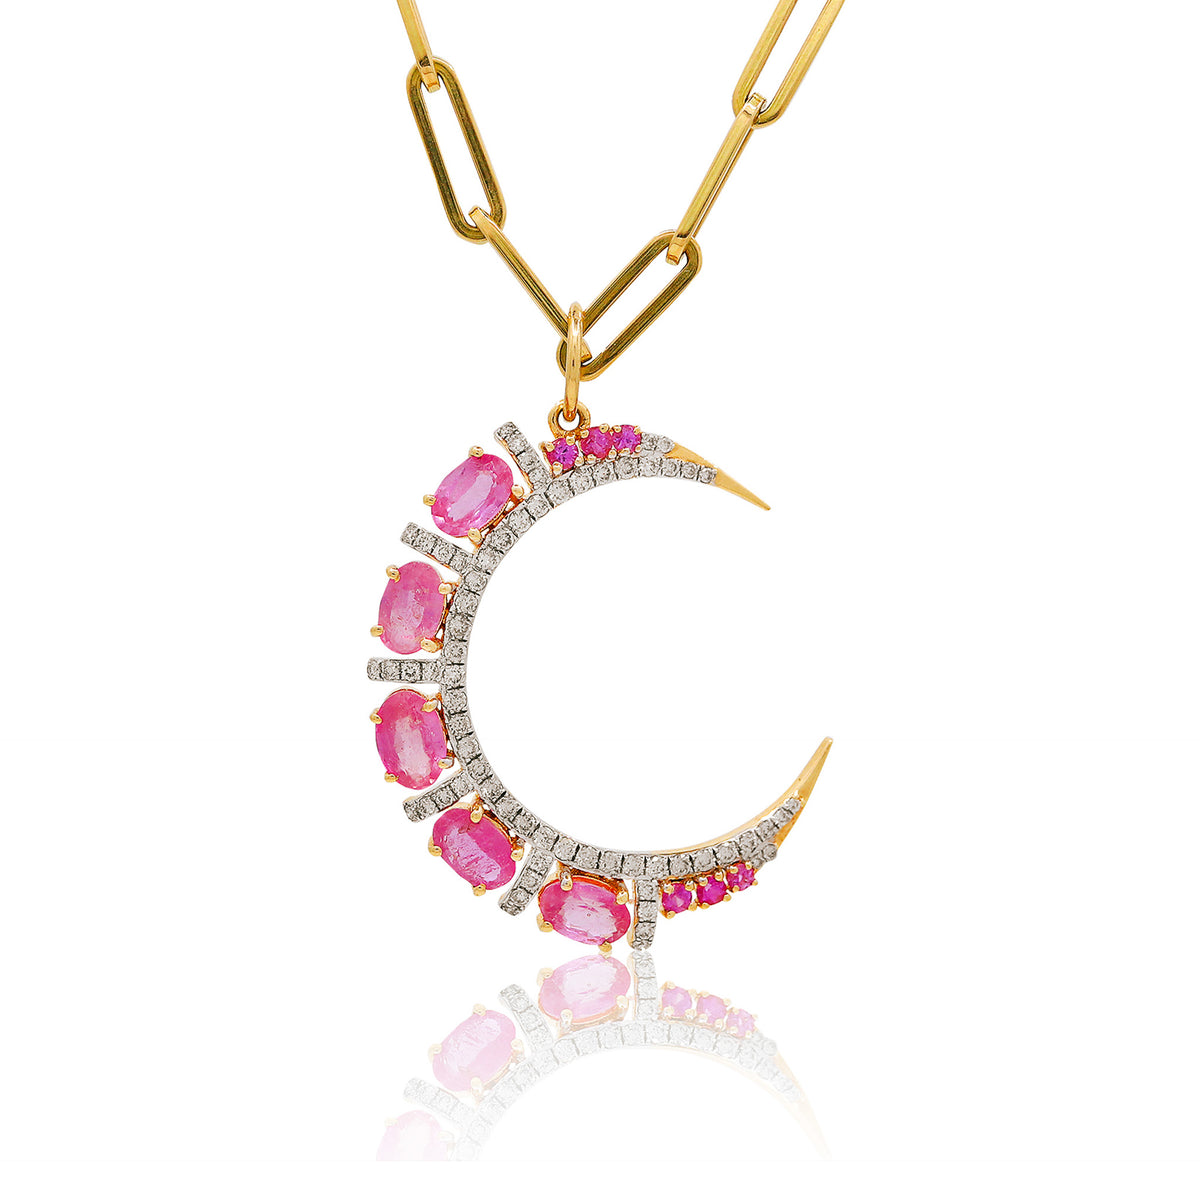 Empress Moon Pendant - Pink Sapphire